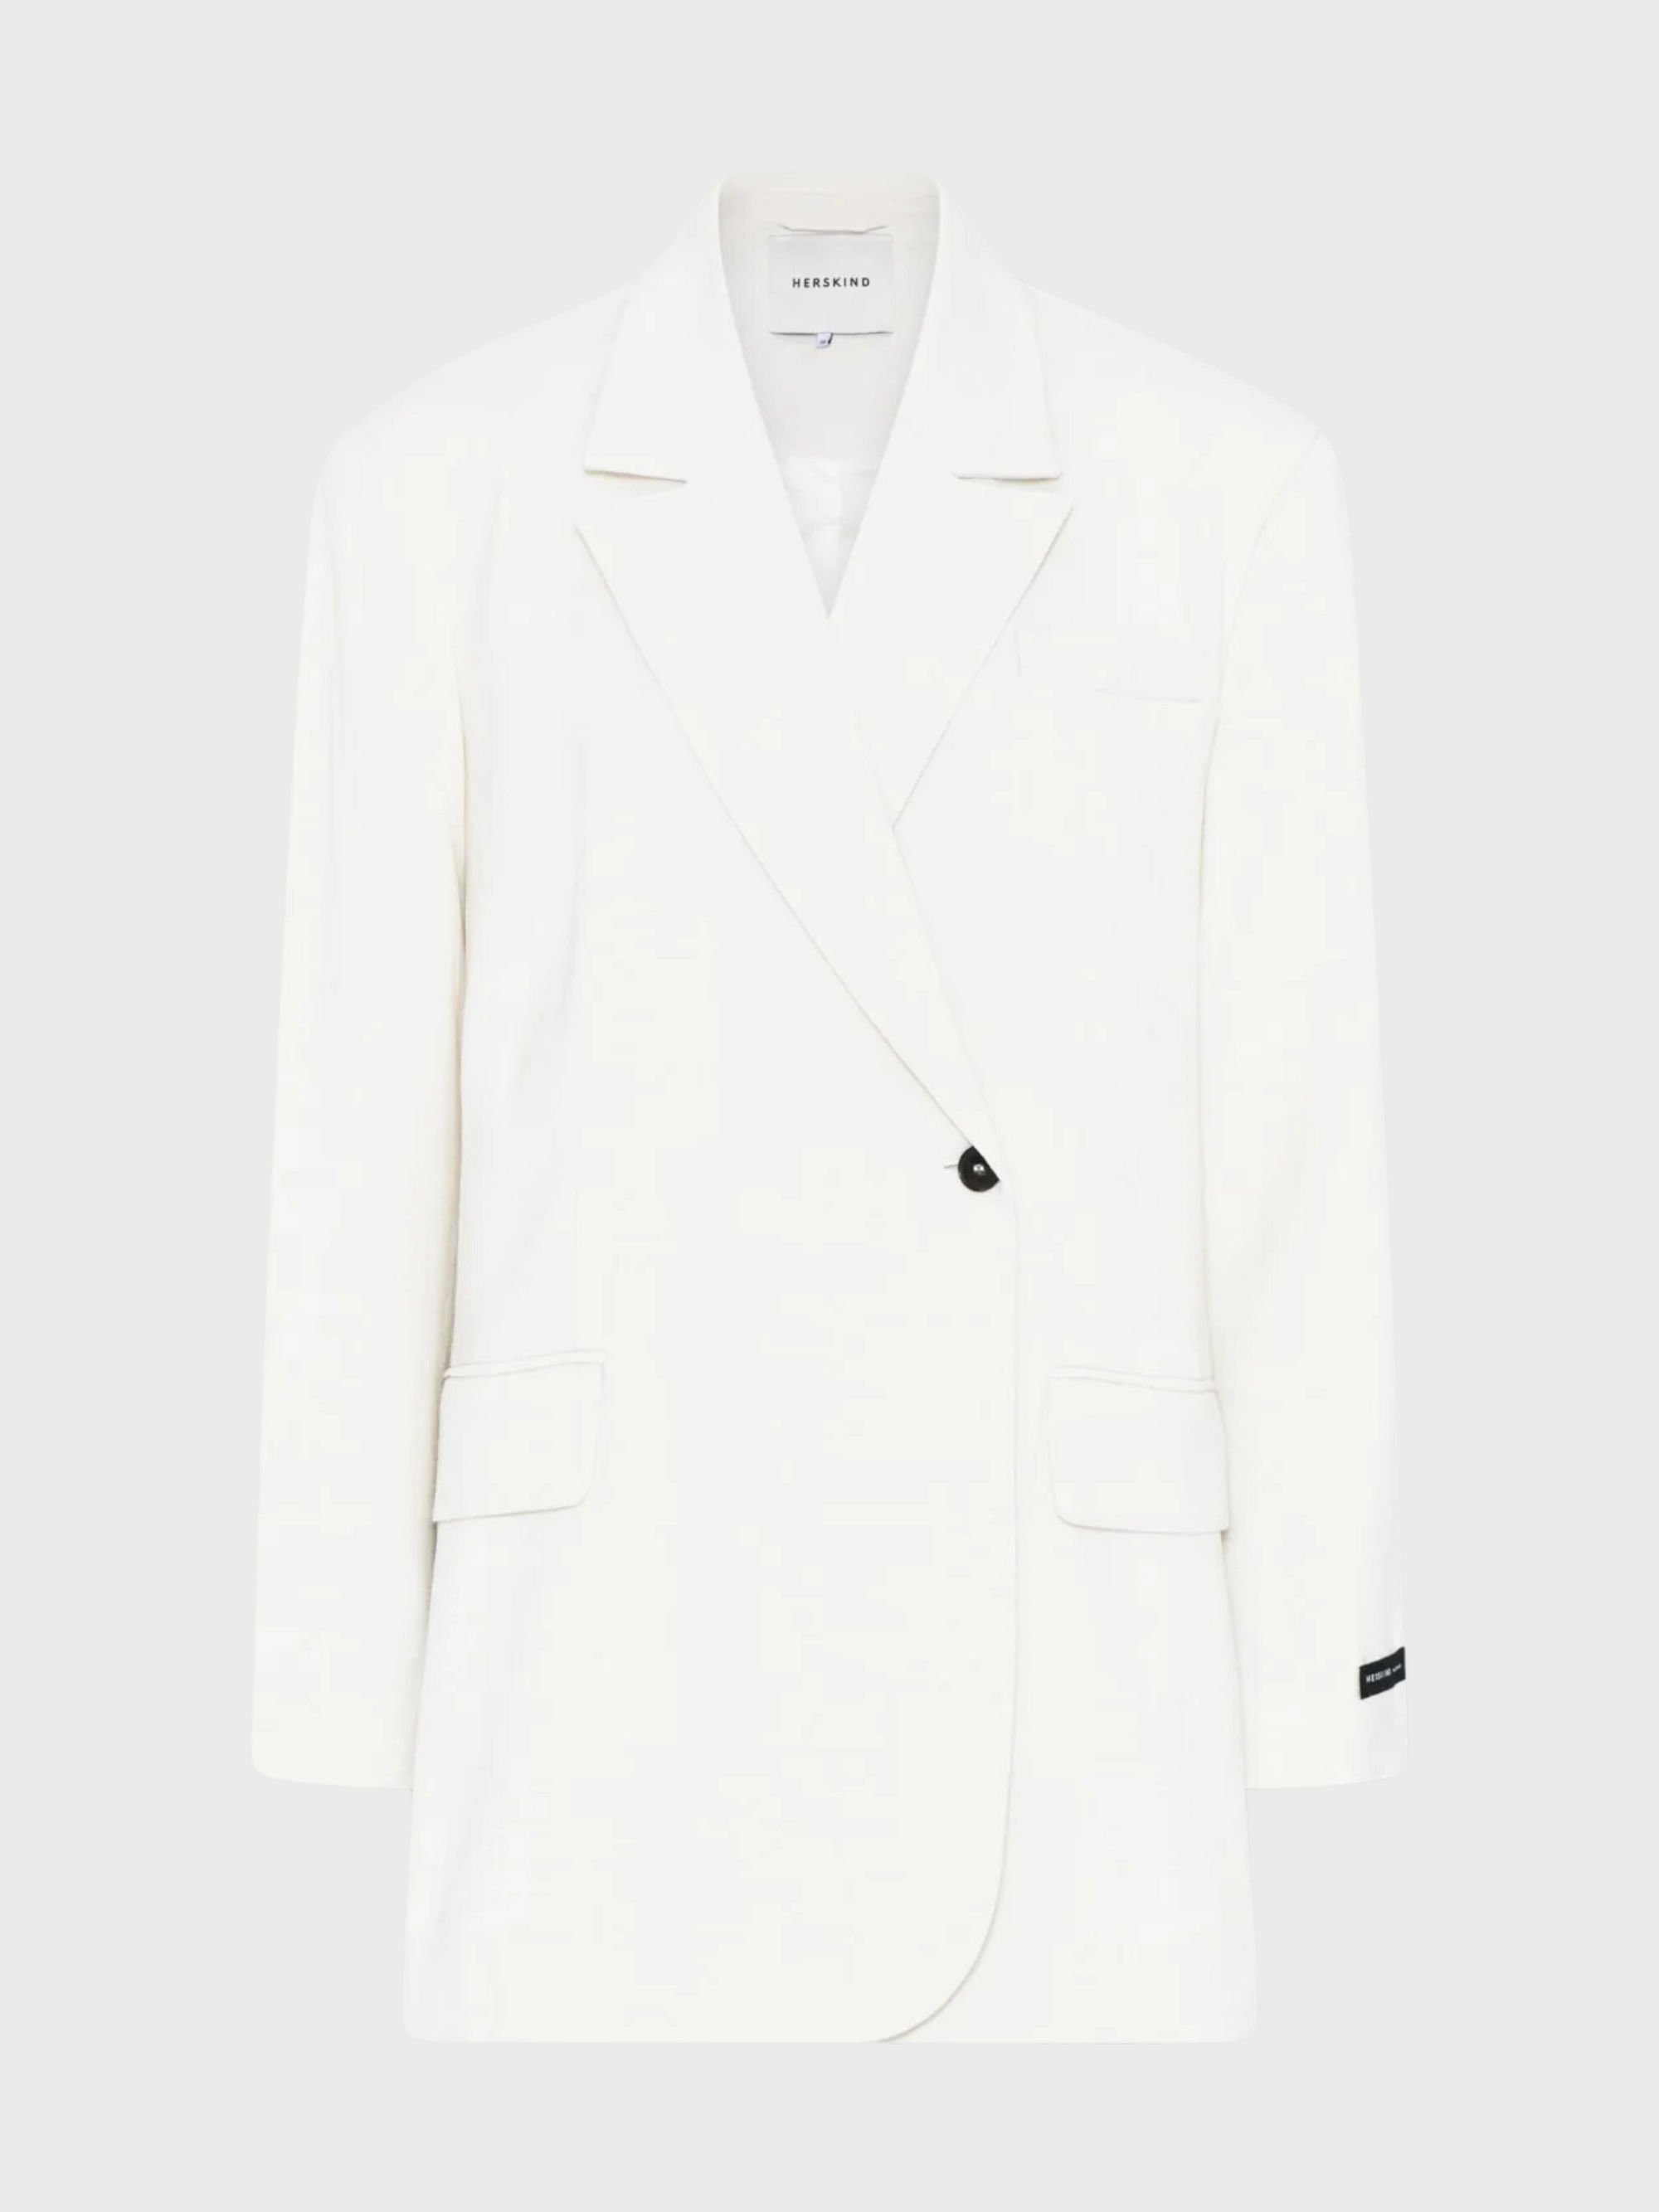 Herskind Verner Blazer Medium White-Jackets-32-West of Woodward Boutique-Vancouver-Canada